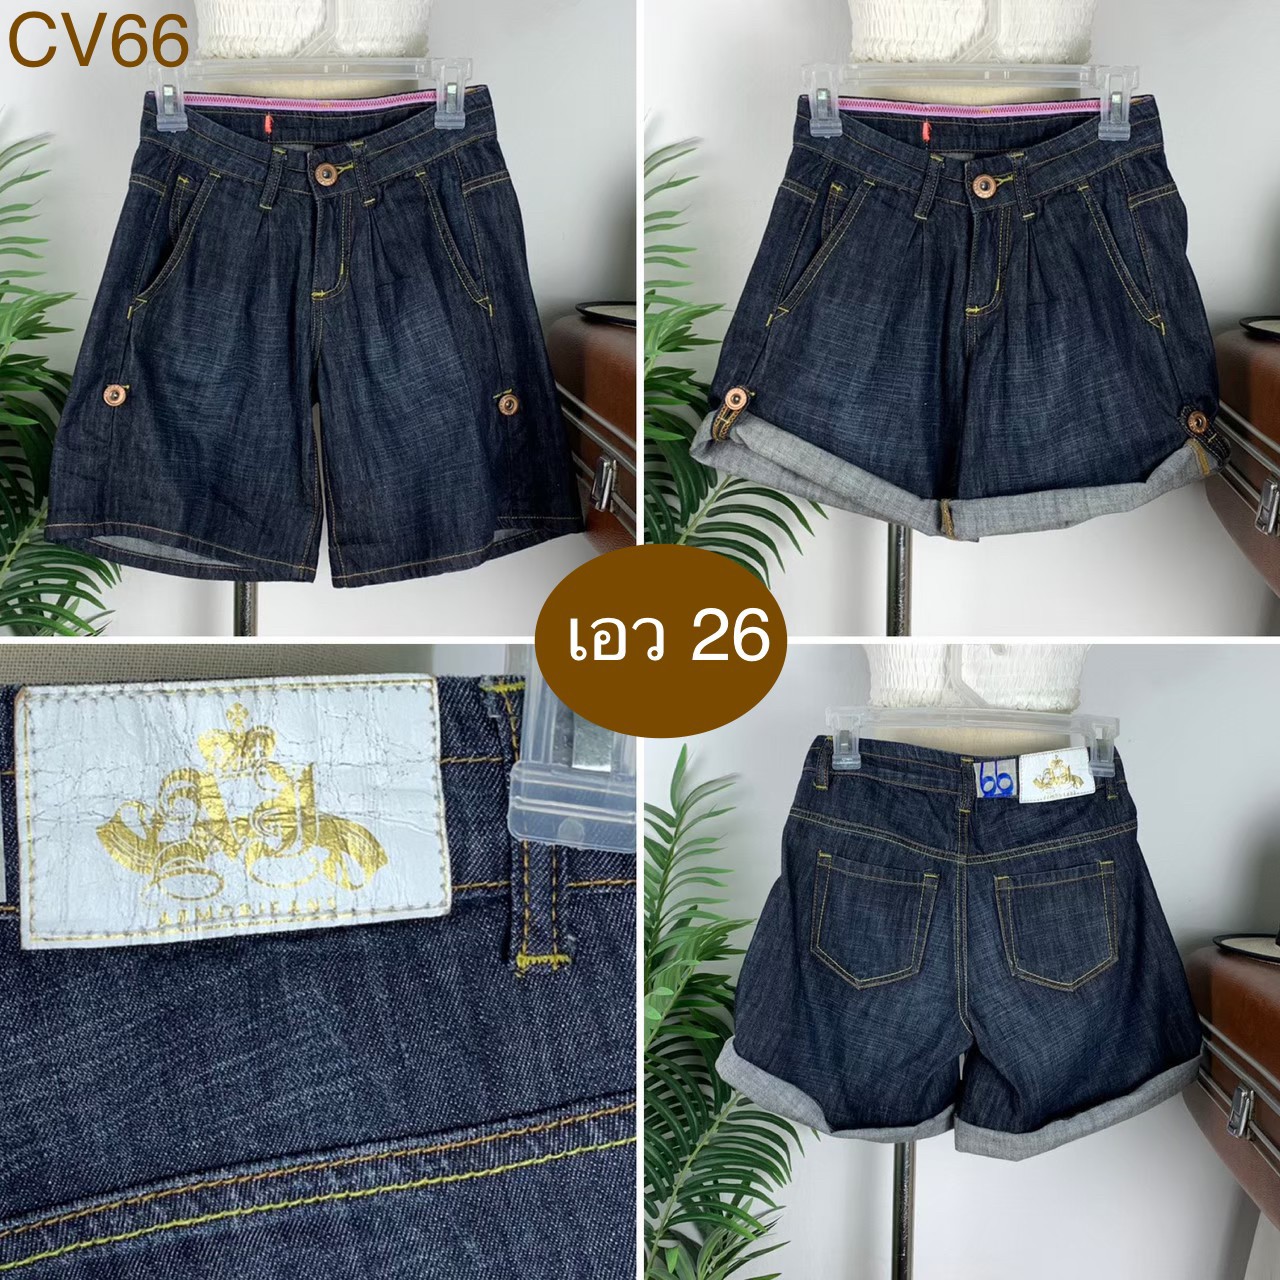 ♥️ รหัสCV66 ▪️ป้าย Armor Jeans  ▪️ เอว 26" สะโพก 36" ต้นขา 23" ▪️เป้า 9" ยาว 13.5" (นิ้ว)